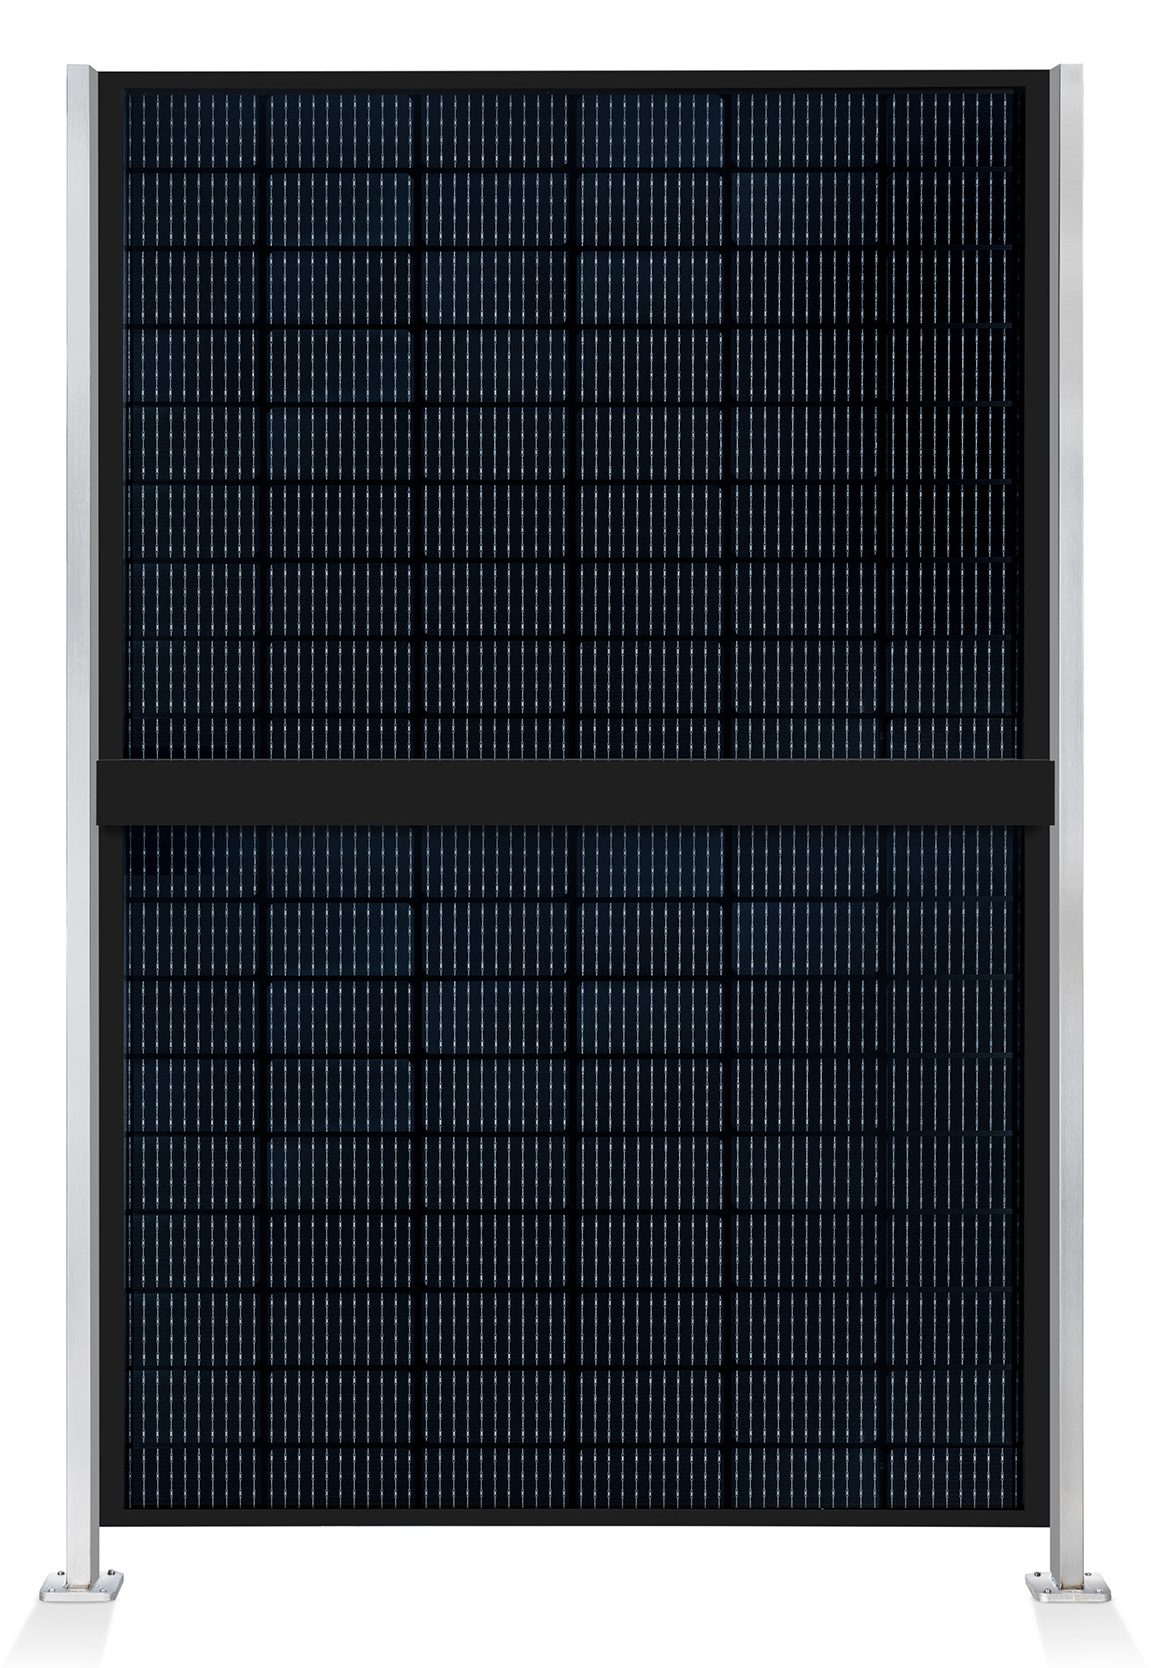 ausschnitt_0004_element-solar-sichtschutz-pv-photovoltaik-zaun-collection-hutter-panel-schwarz-pfosten-edelstahl-rueckse